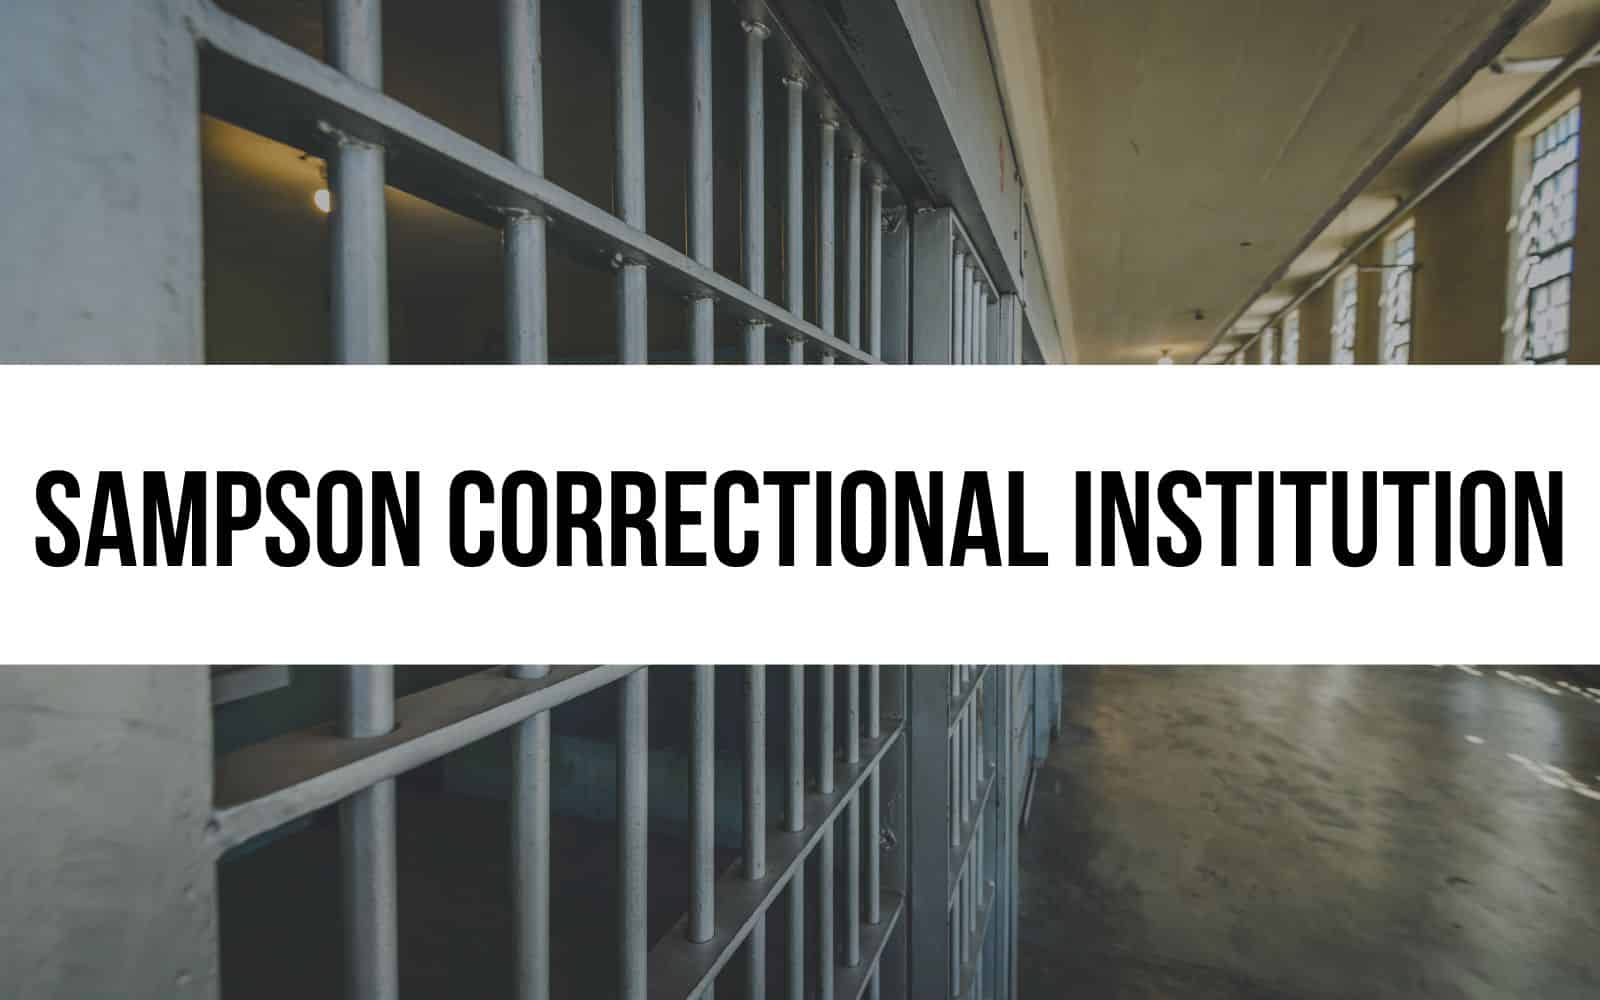 Sampson Correctional Institution